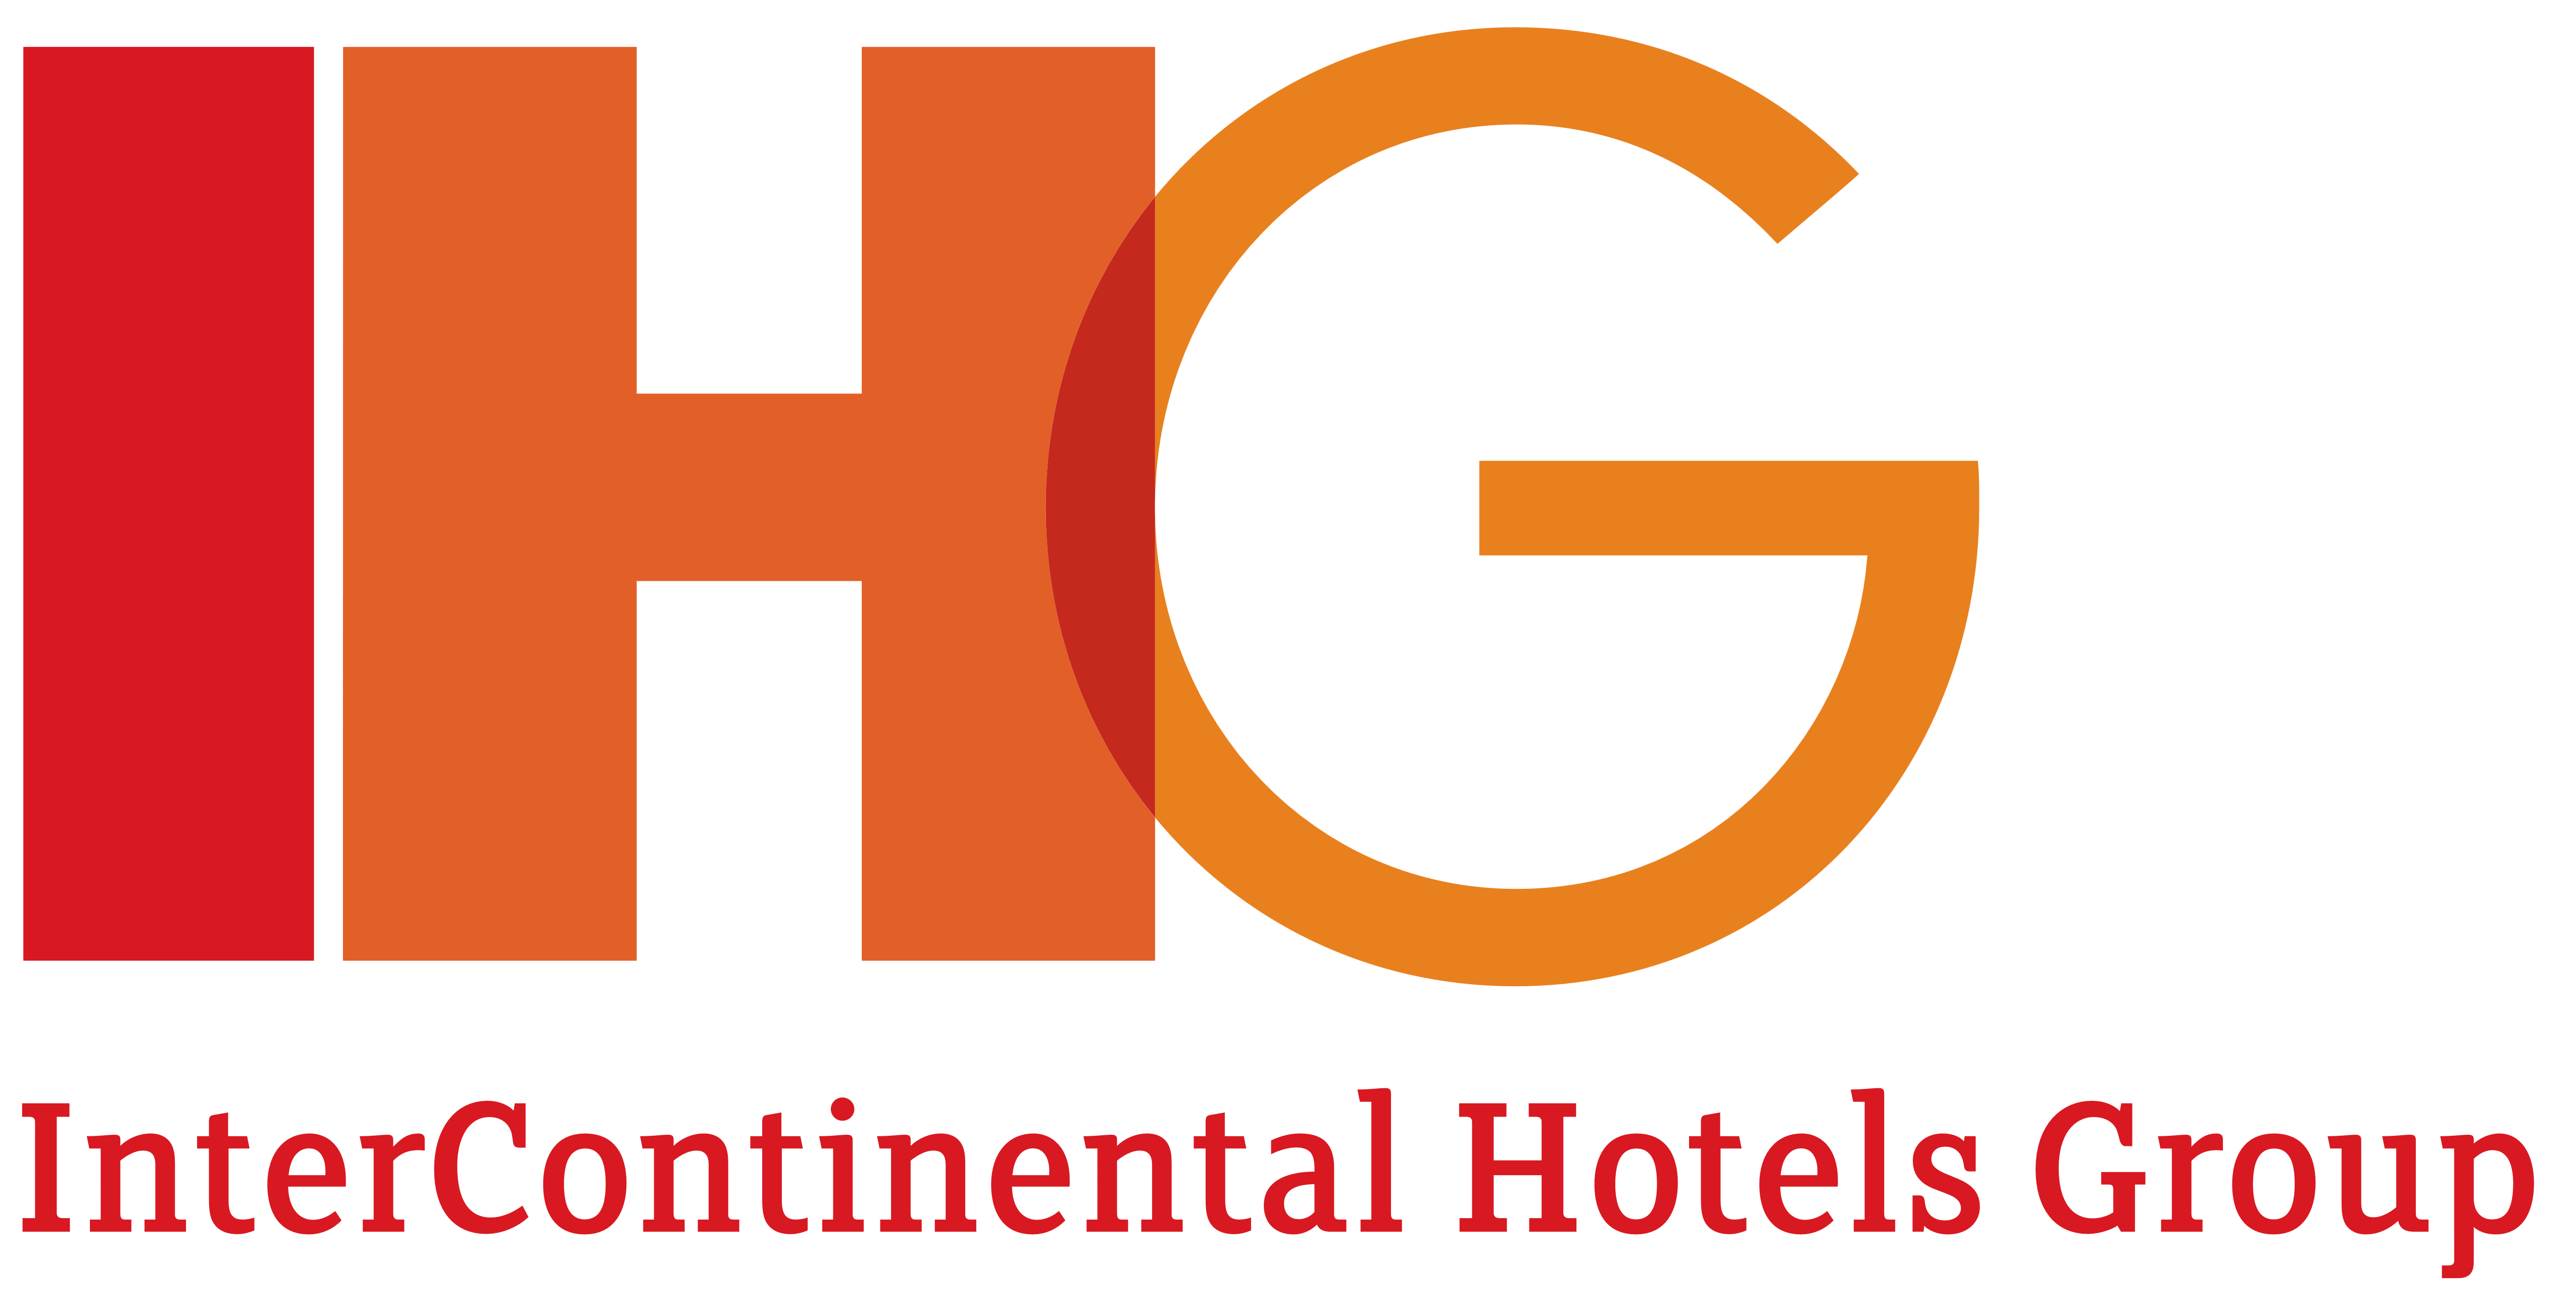 Ihg logo png, Intercontinental hotels group #41813